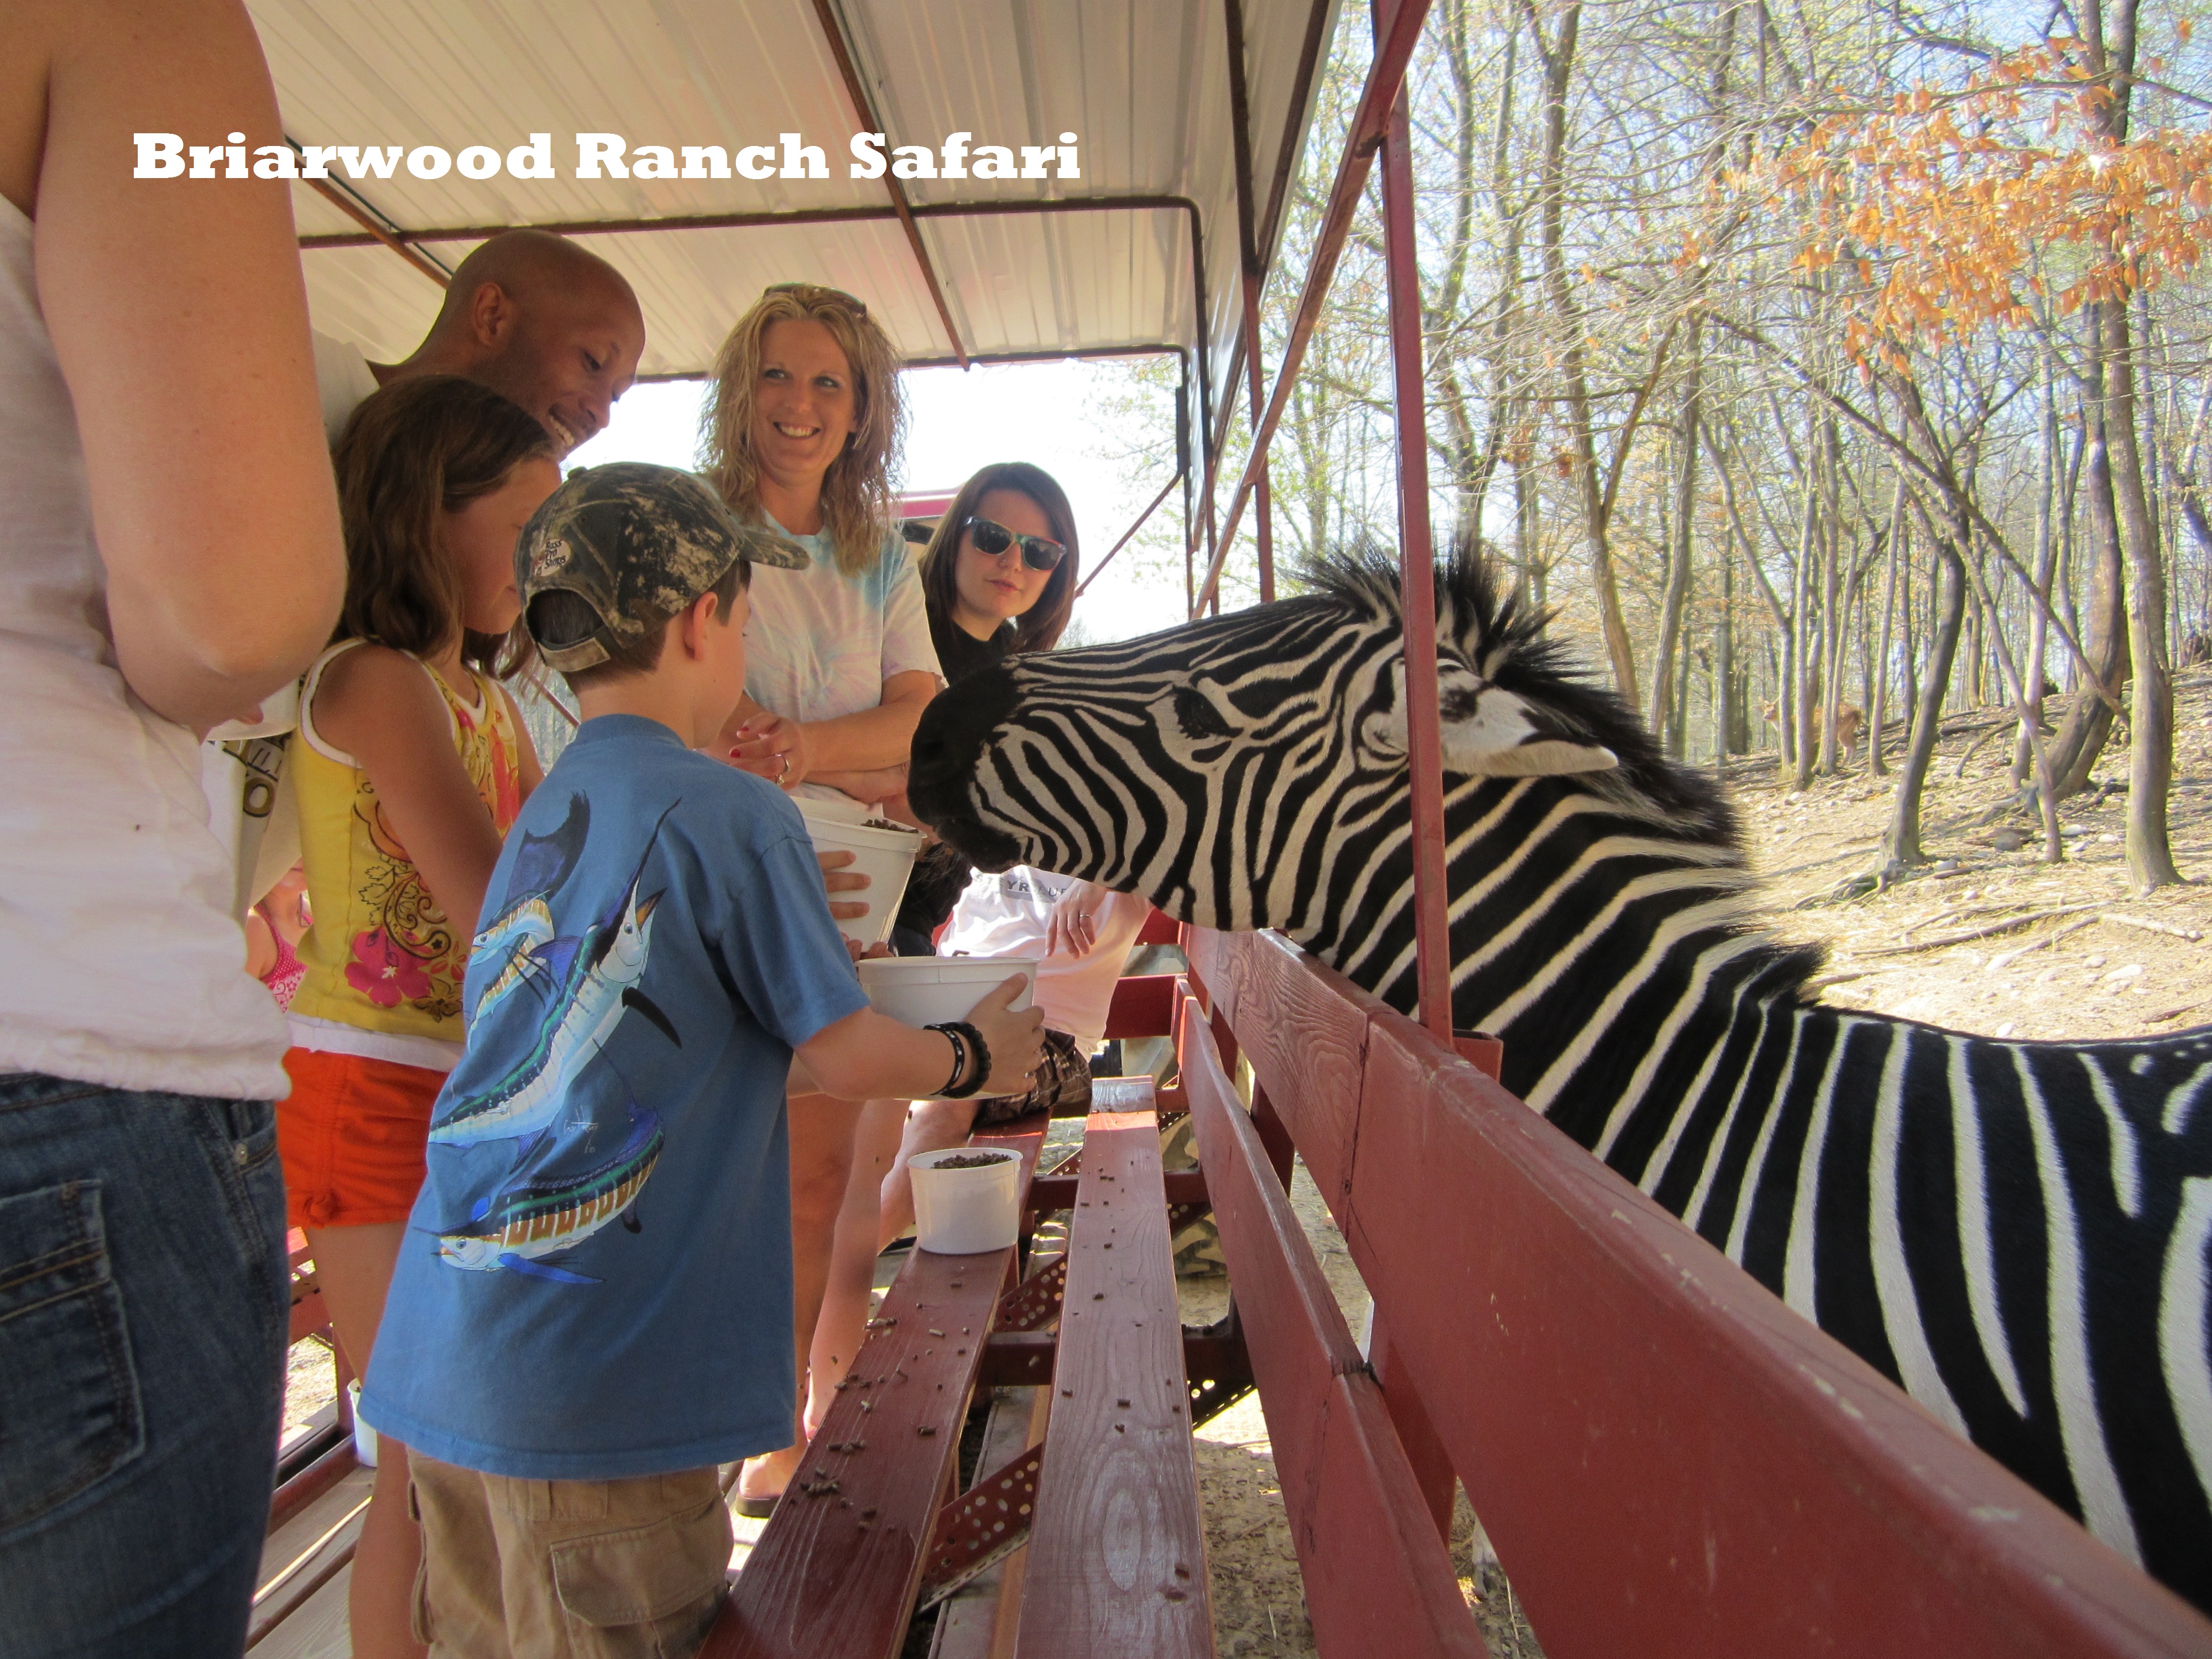 Briarwood-Ranch-Safari-13-w-text.jpg